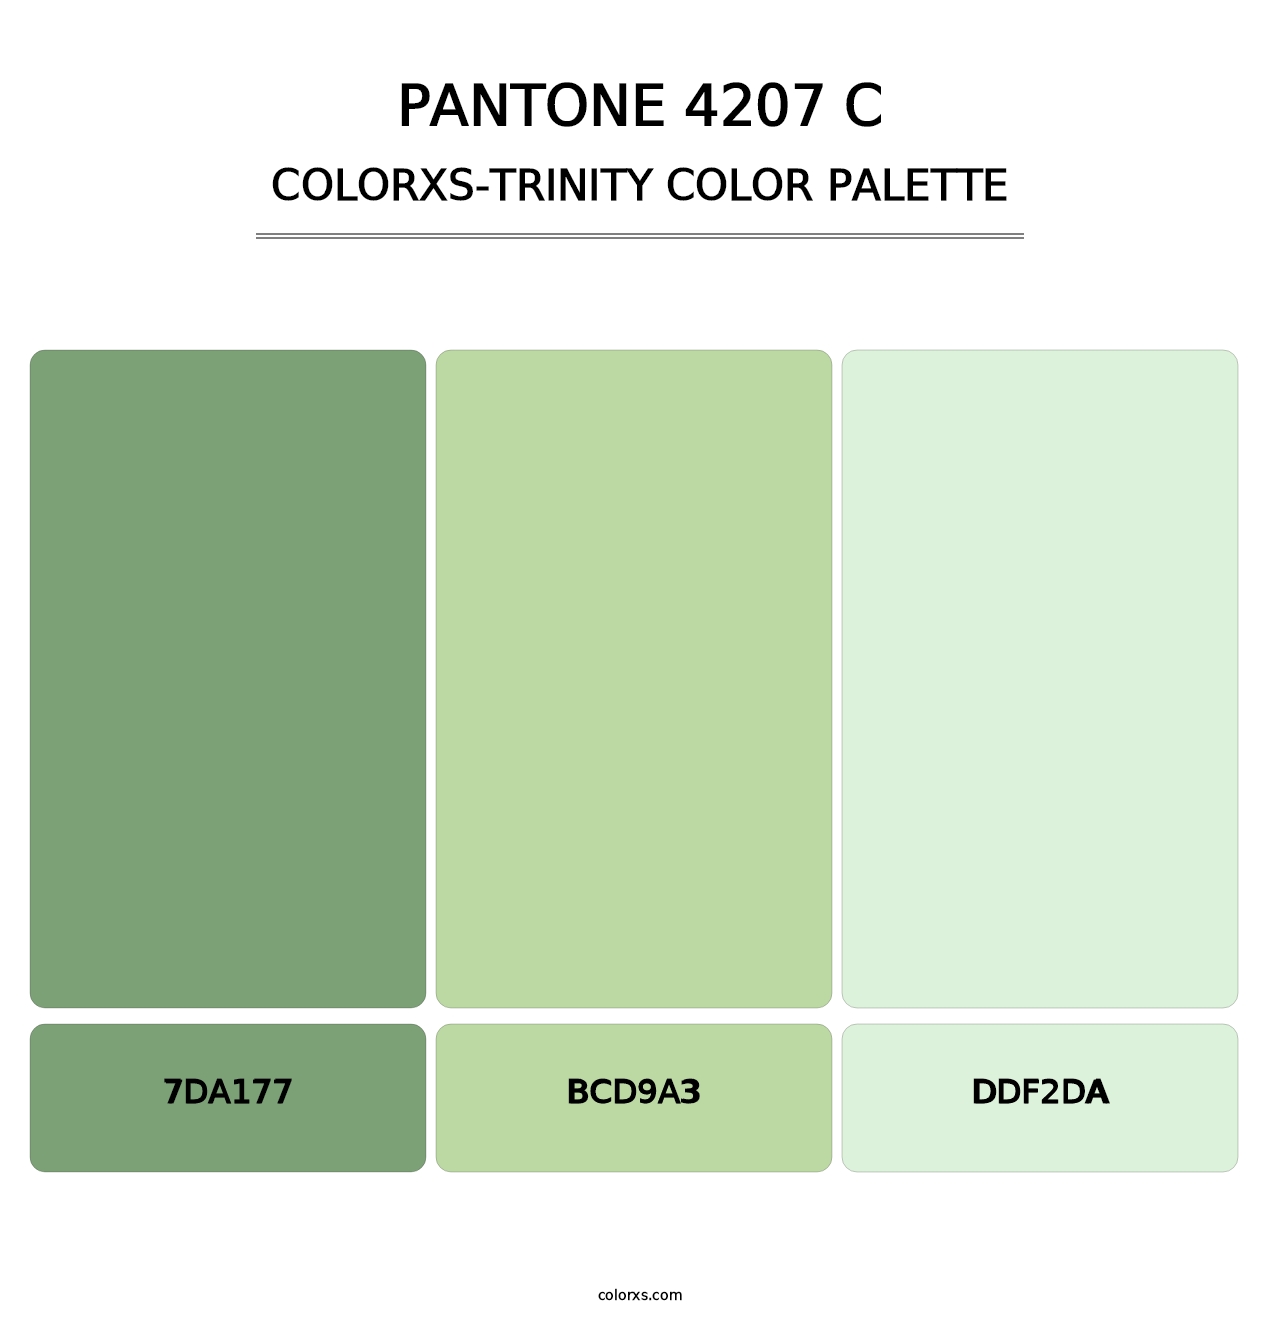 PANTONE 4207 C - Colorxs Trinity Palette